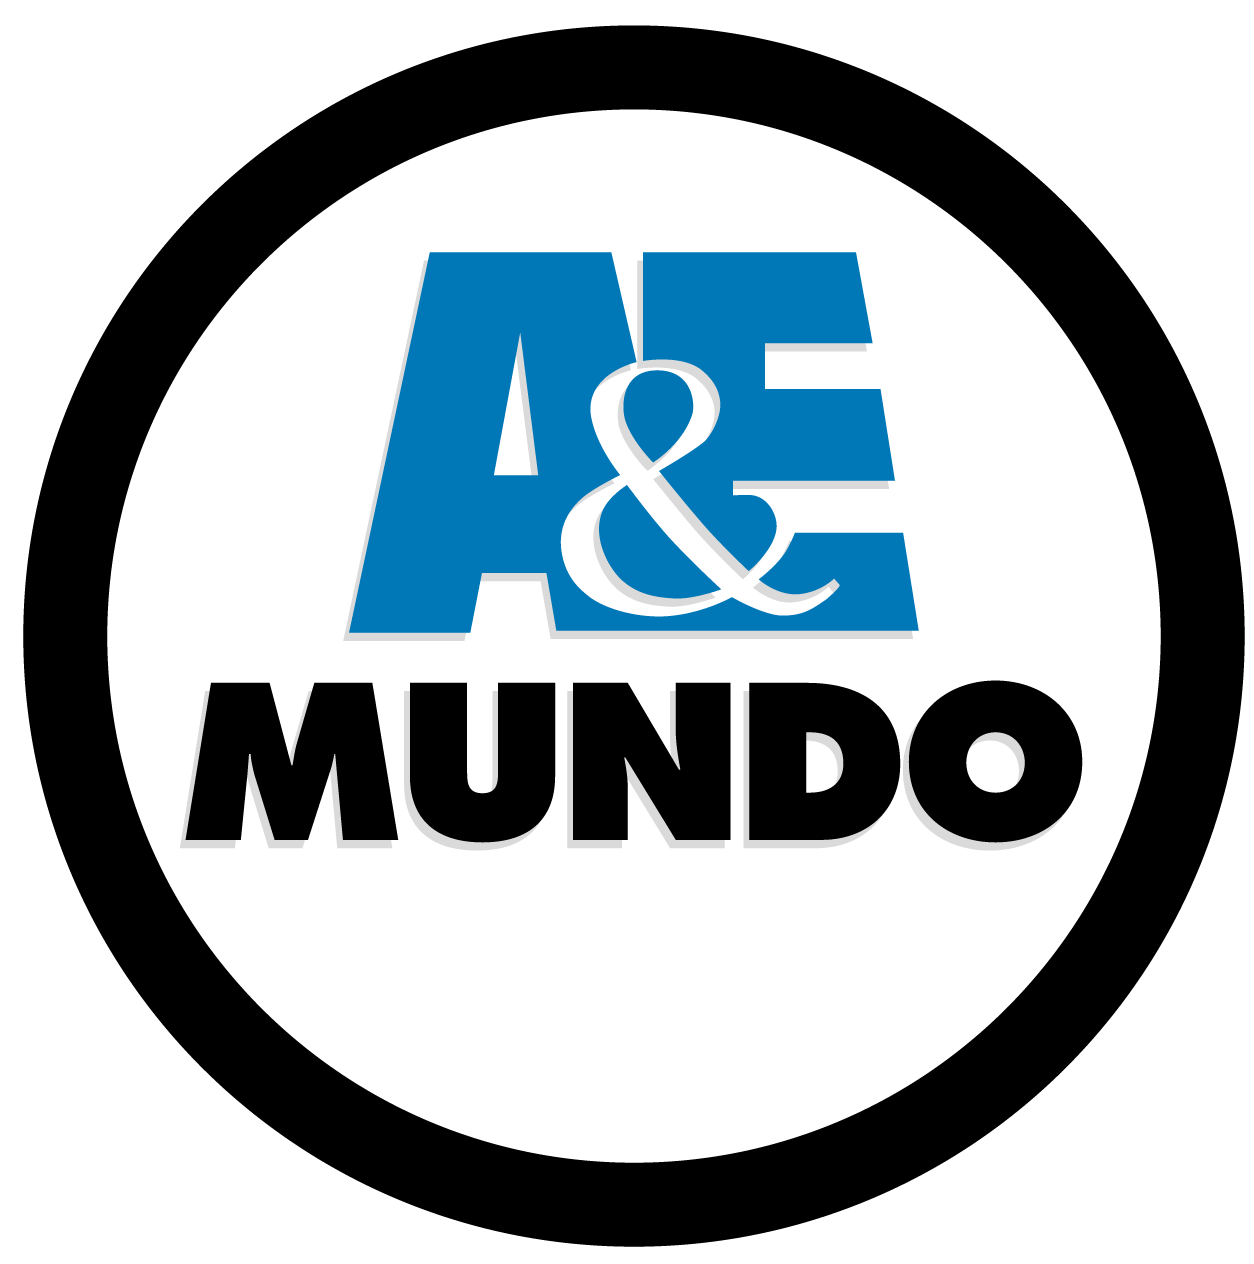 A&E Logo - A&E (Latin America)